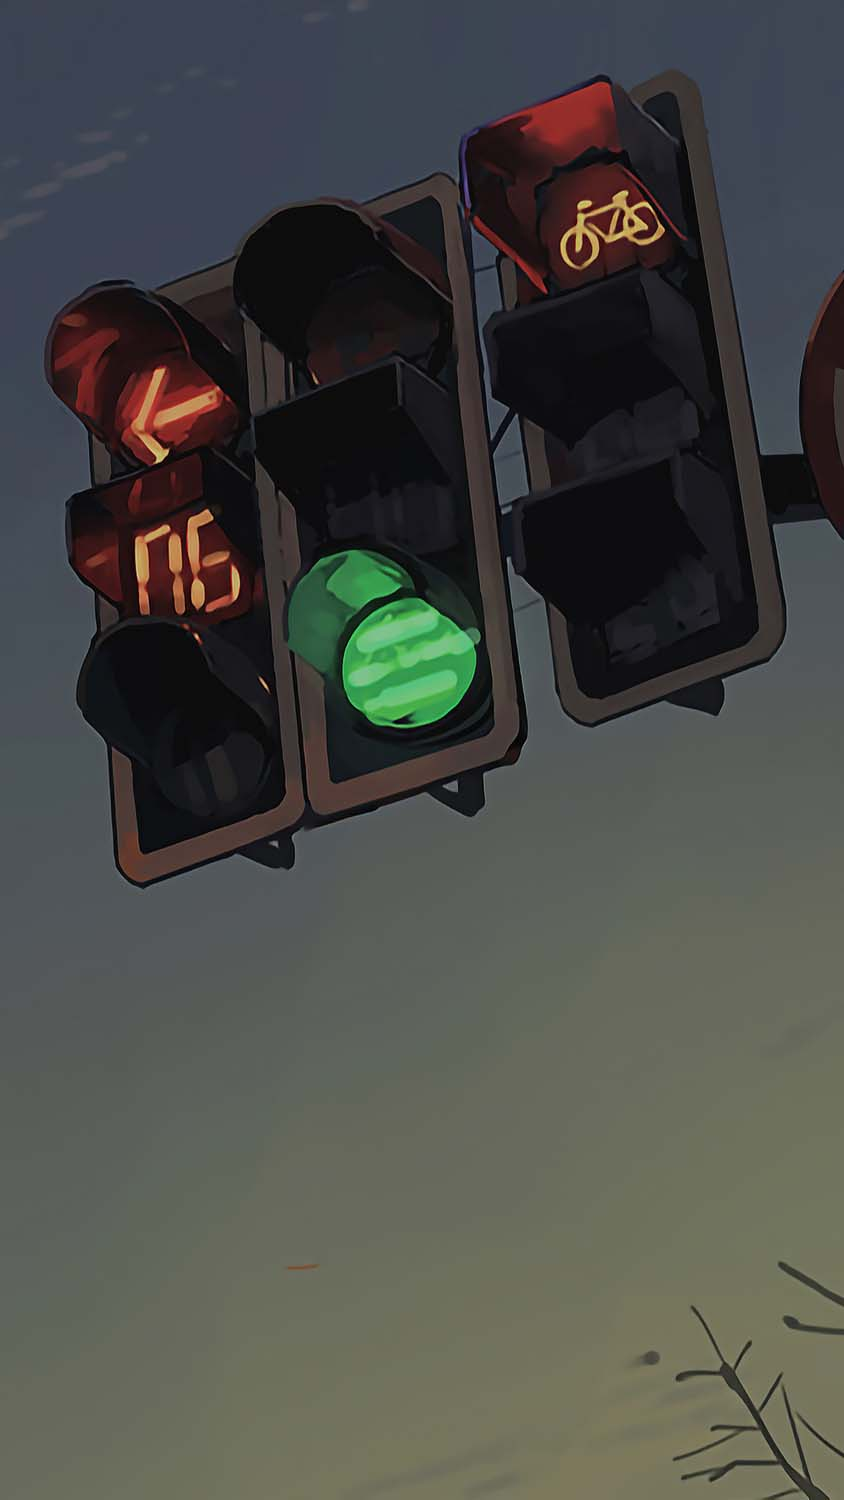 Road sign traffic lights digital art iPhone Wallpaper 4K  iPhone Wallpapers